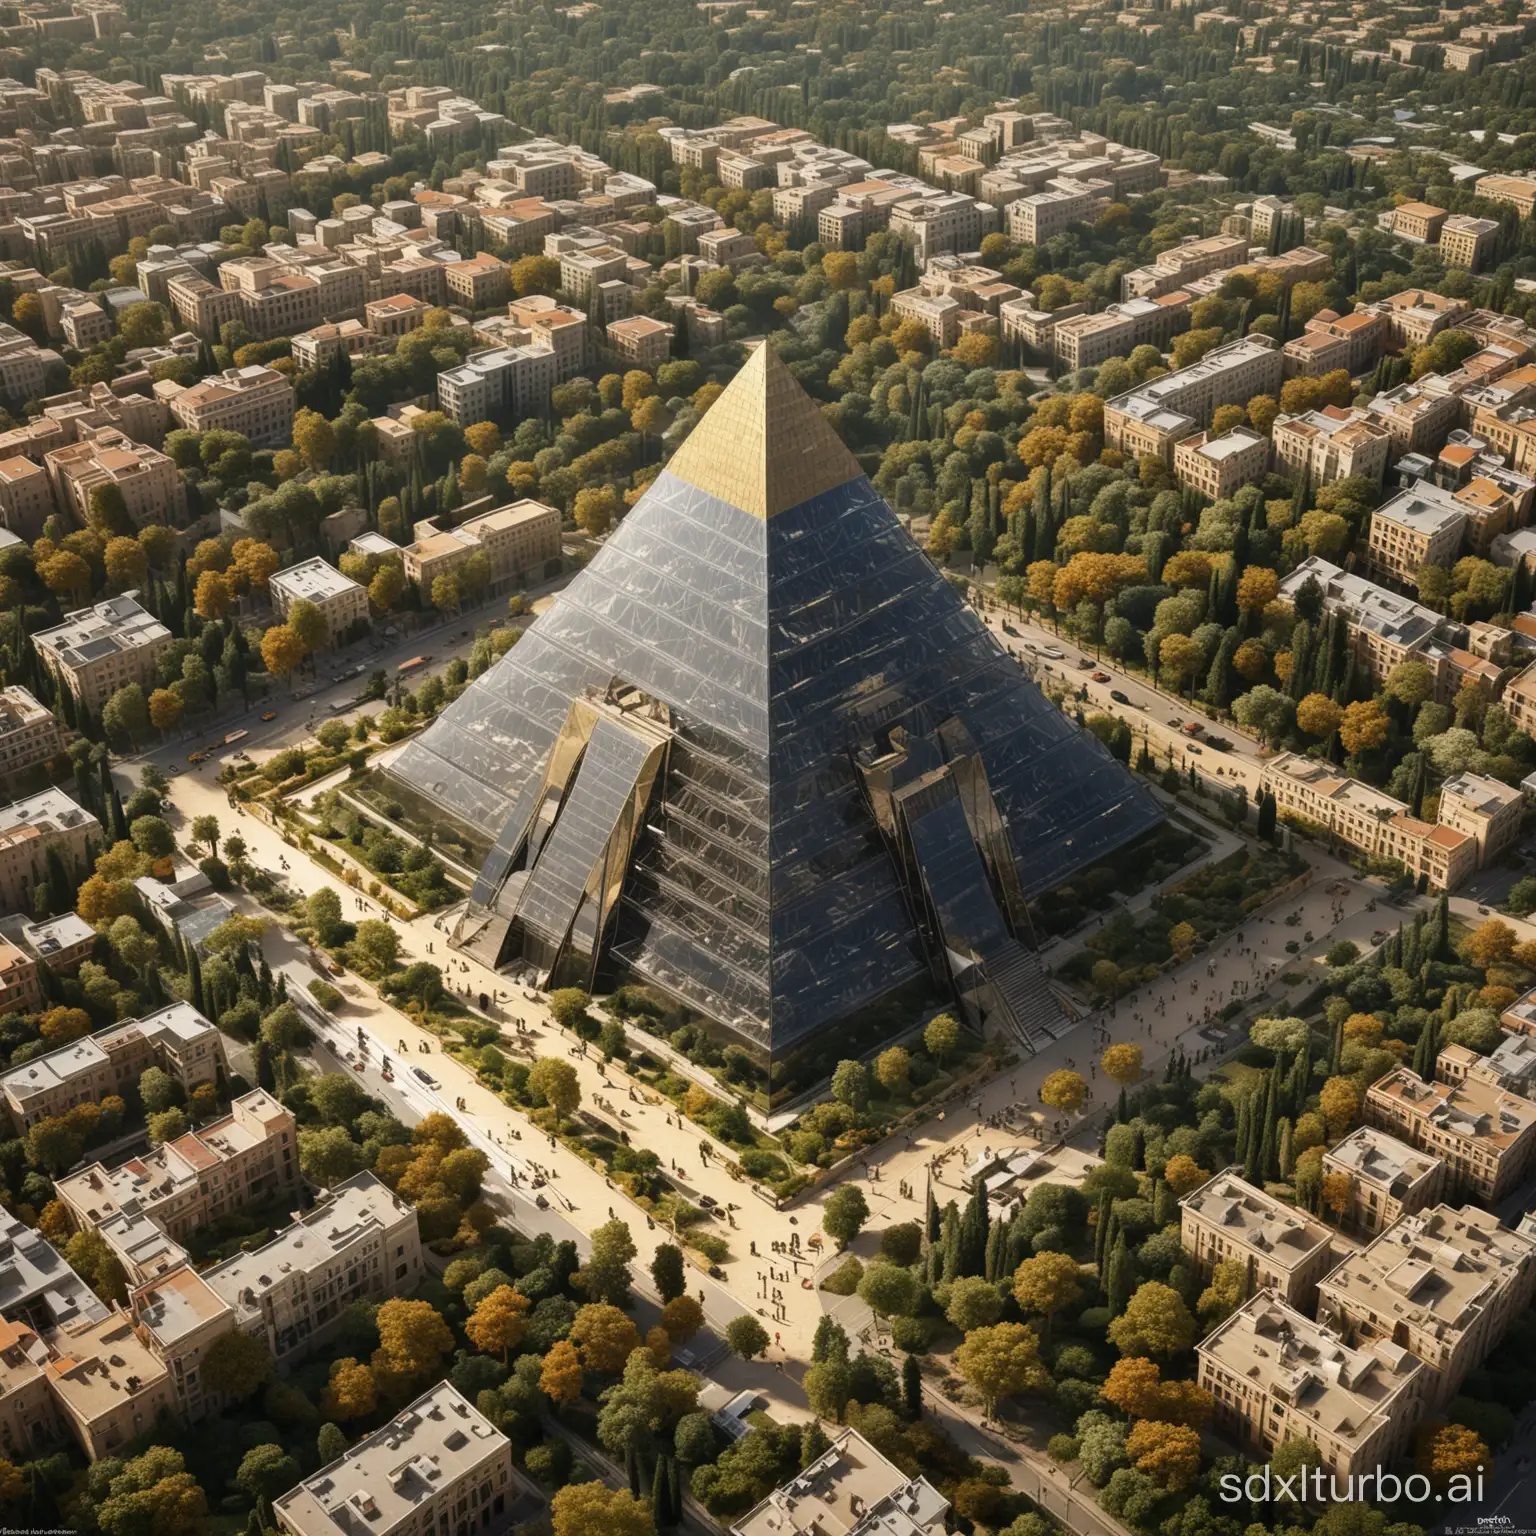 Futuristic-Pyramidal-CathedralCastle-with-Lush-Gardens